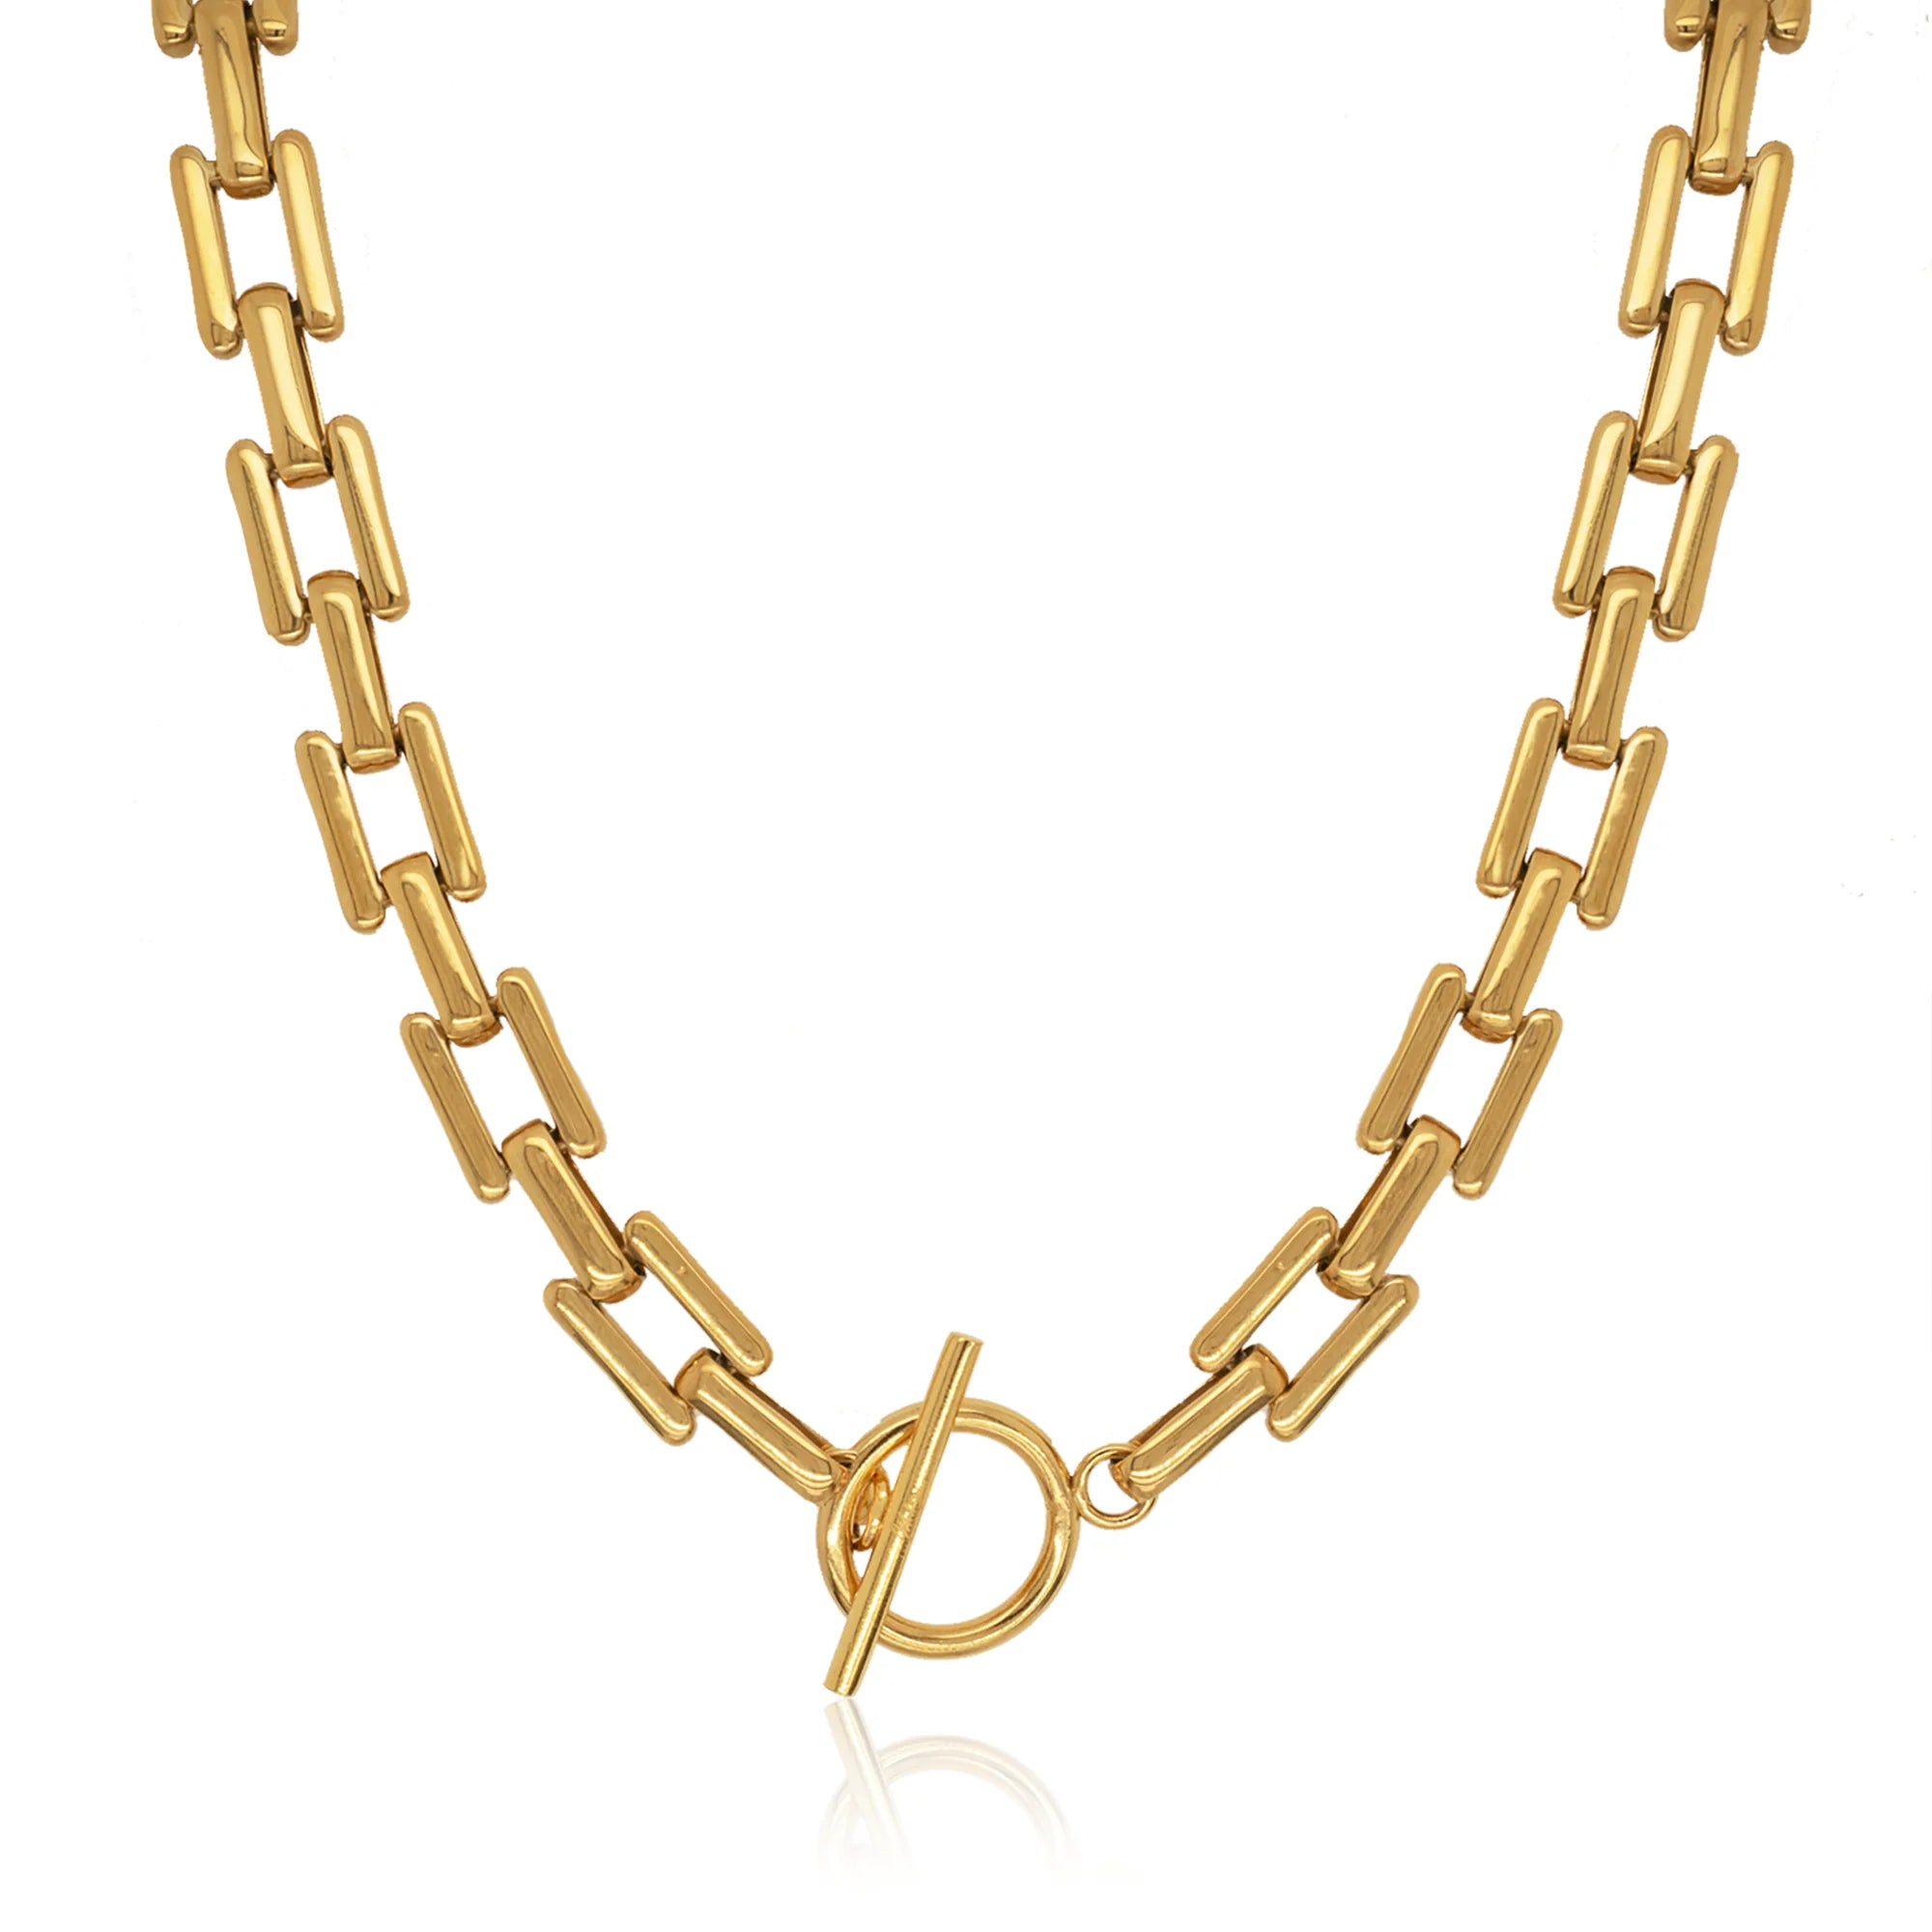 The Lennon Chain Necklace